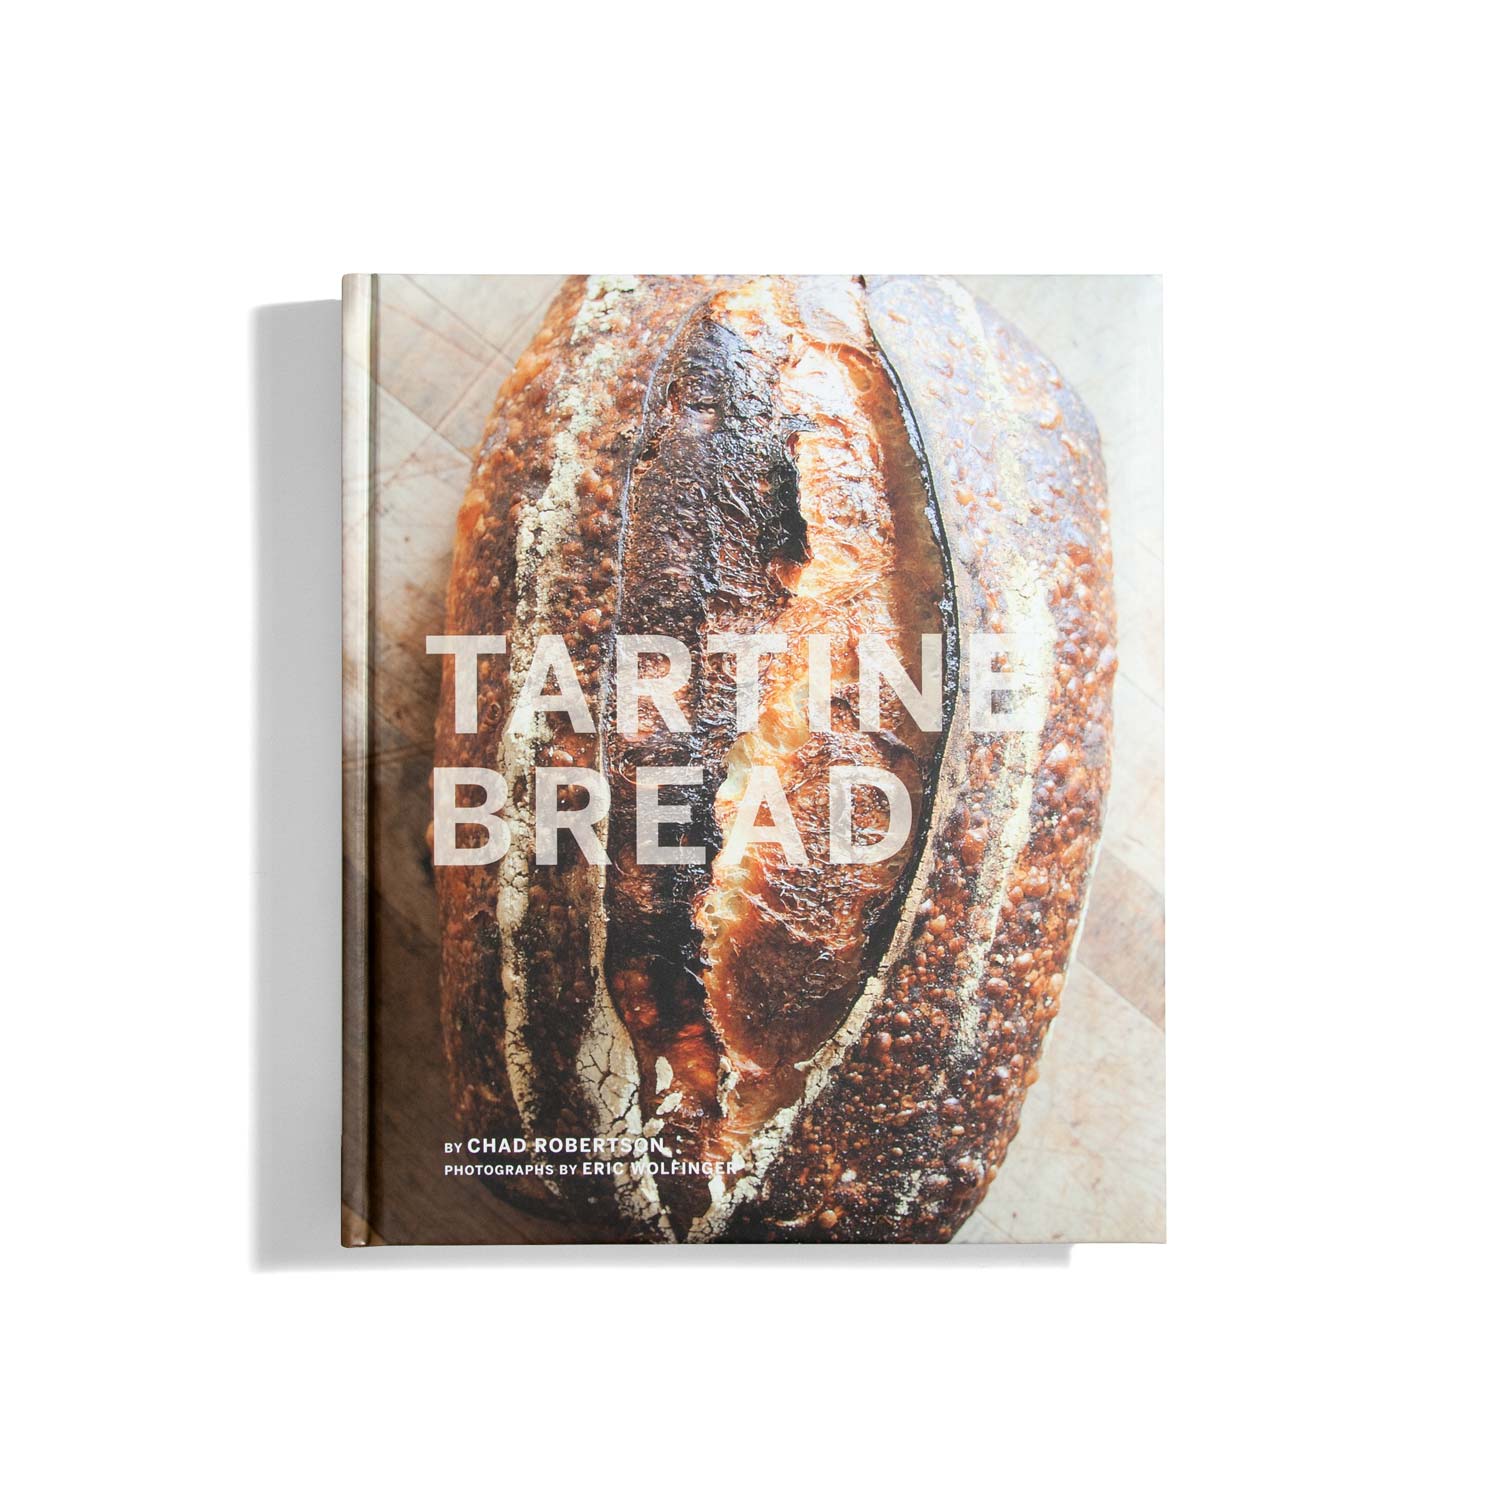 Tartine Bread - Chad Robertson